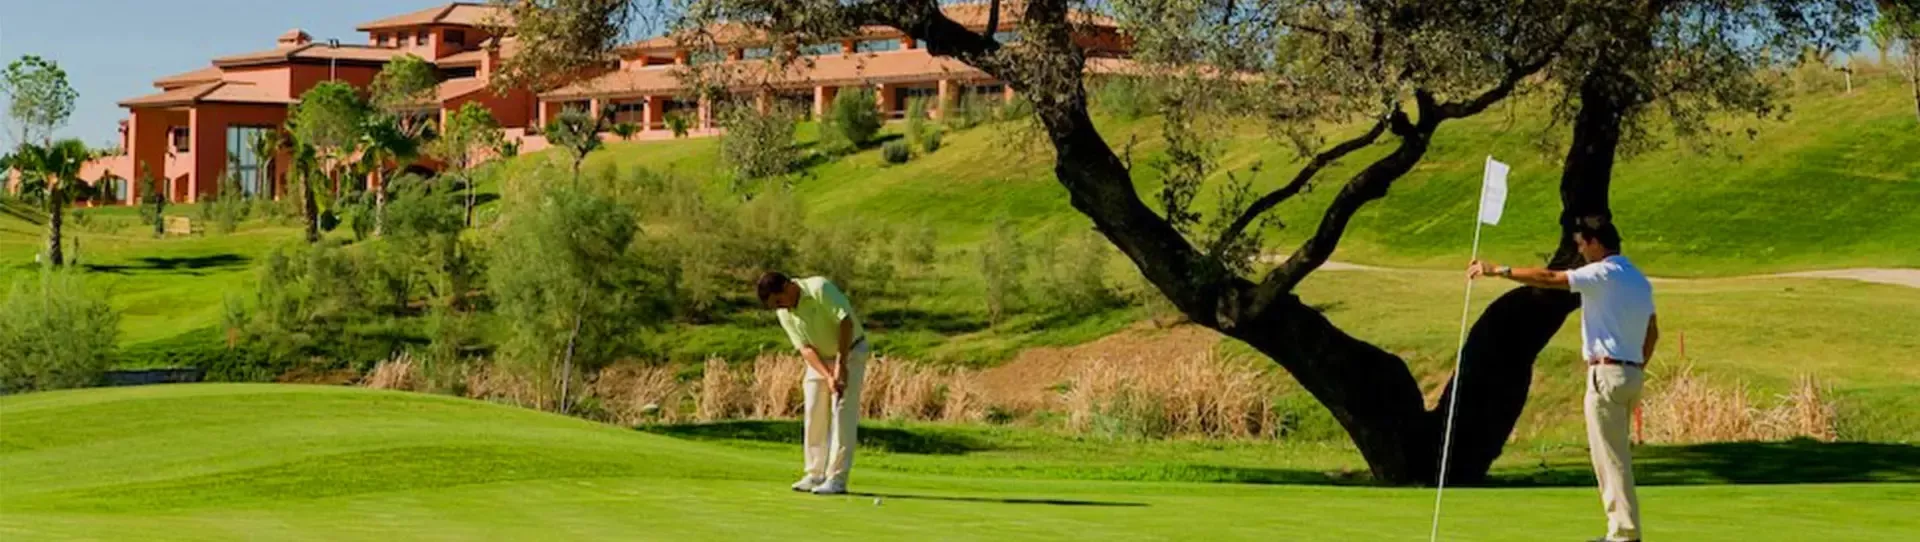 Spain golf courses - Hato Verde Club de Golf - Photo 2